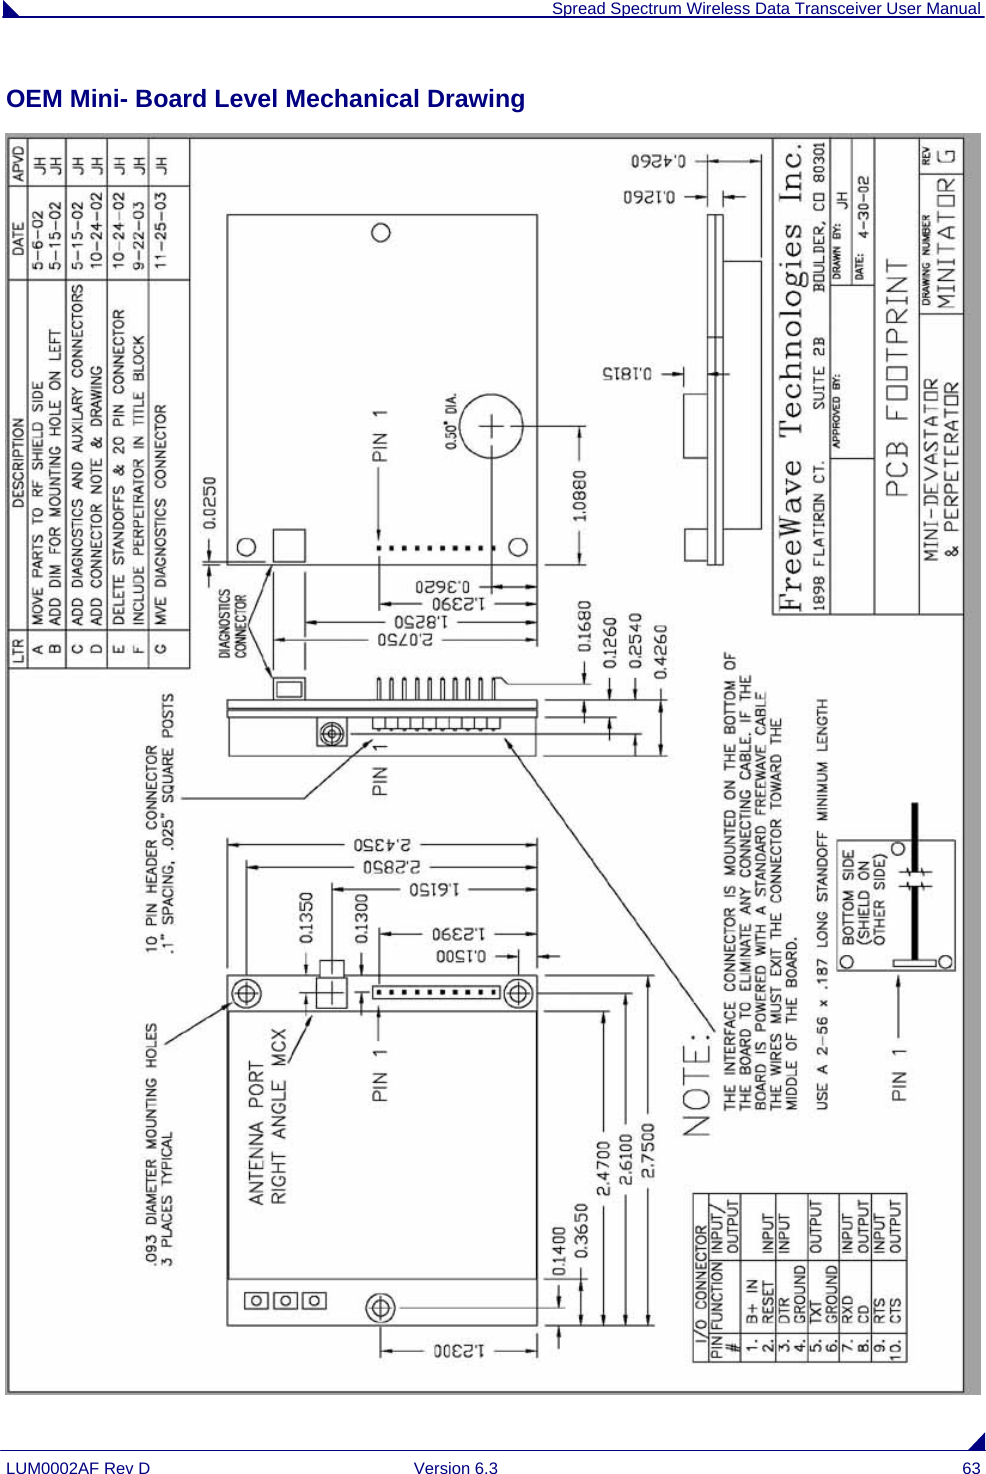  Spread Spectrum Wireless Data Transceiver User Manual LUM0002AF Rev D  Version 6.3  63 OEM Mini- Board Level Mechanical Drawing  